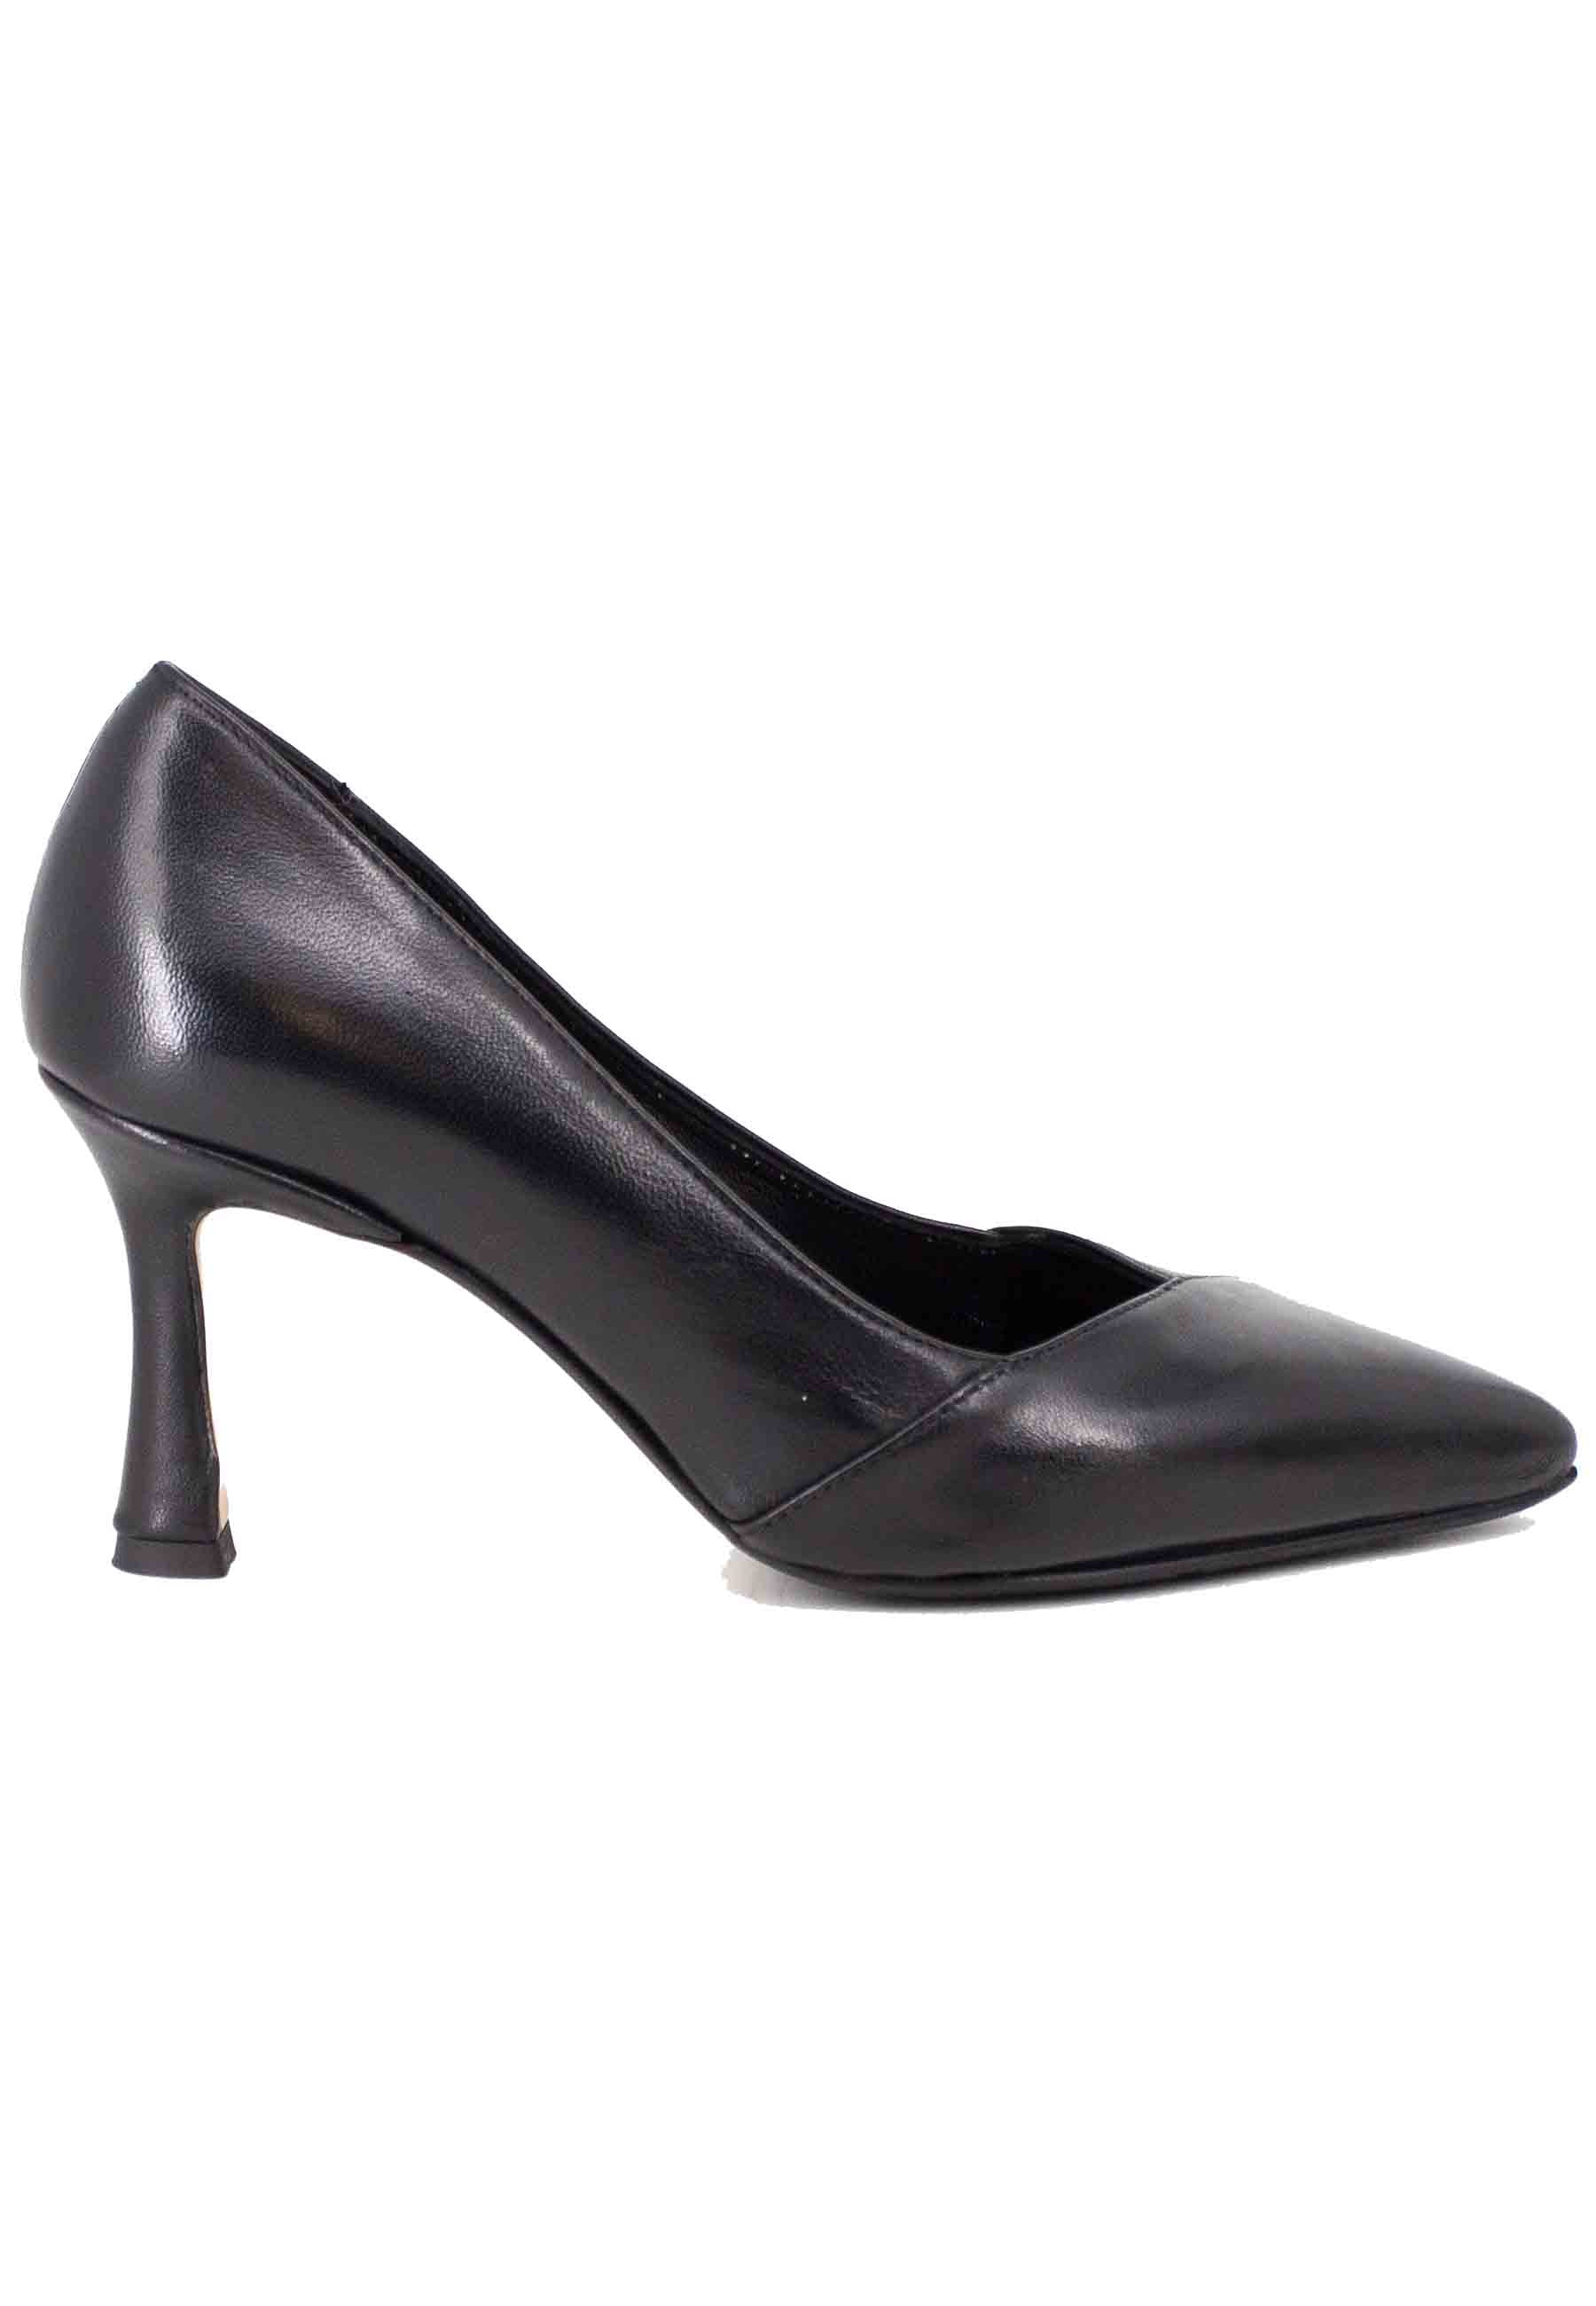 Women's high heel black leather pumps